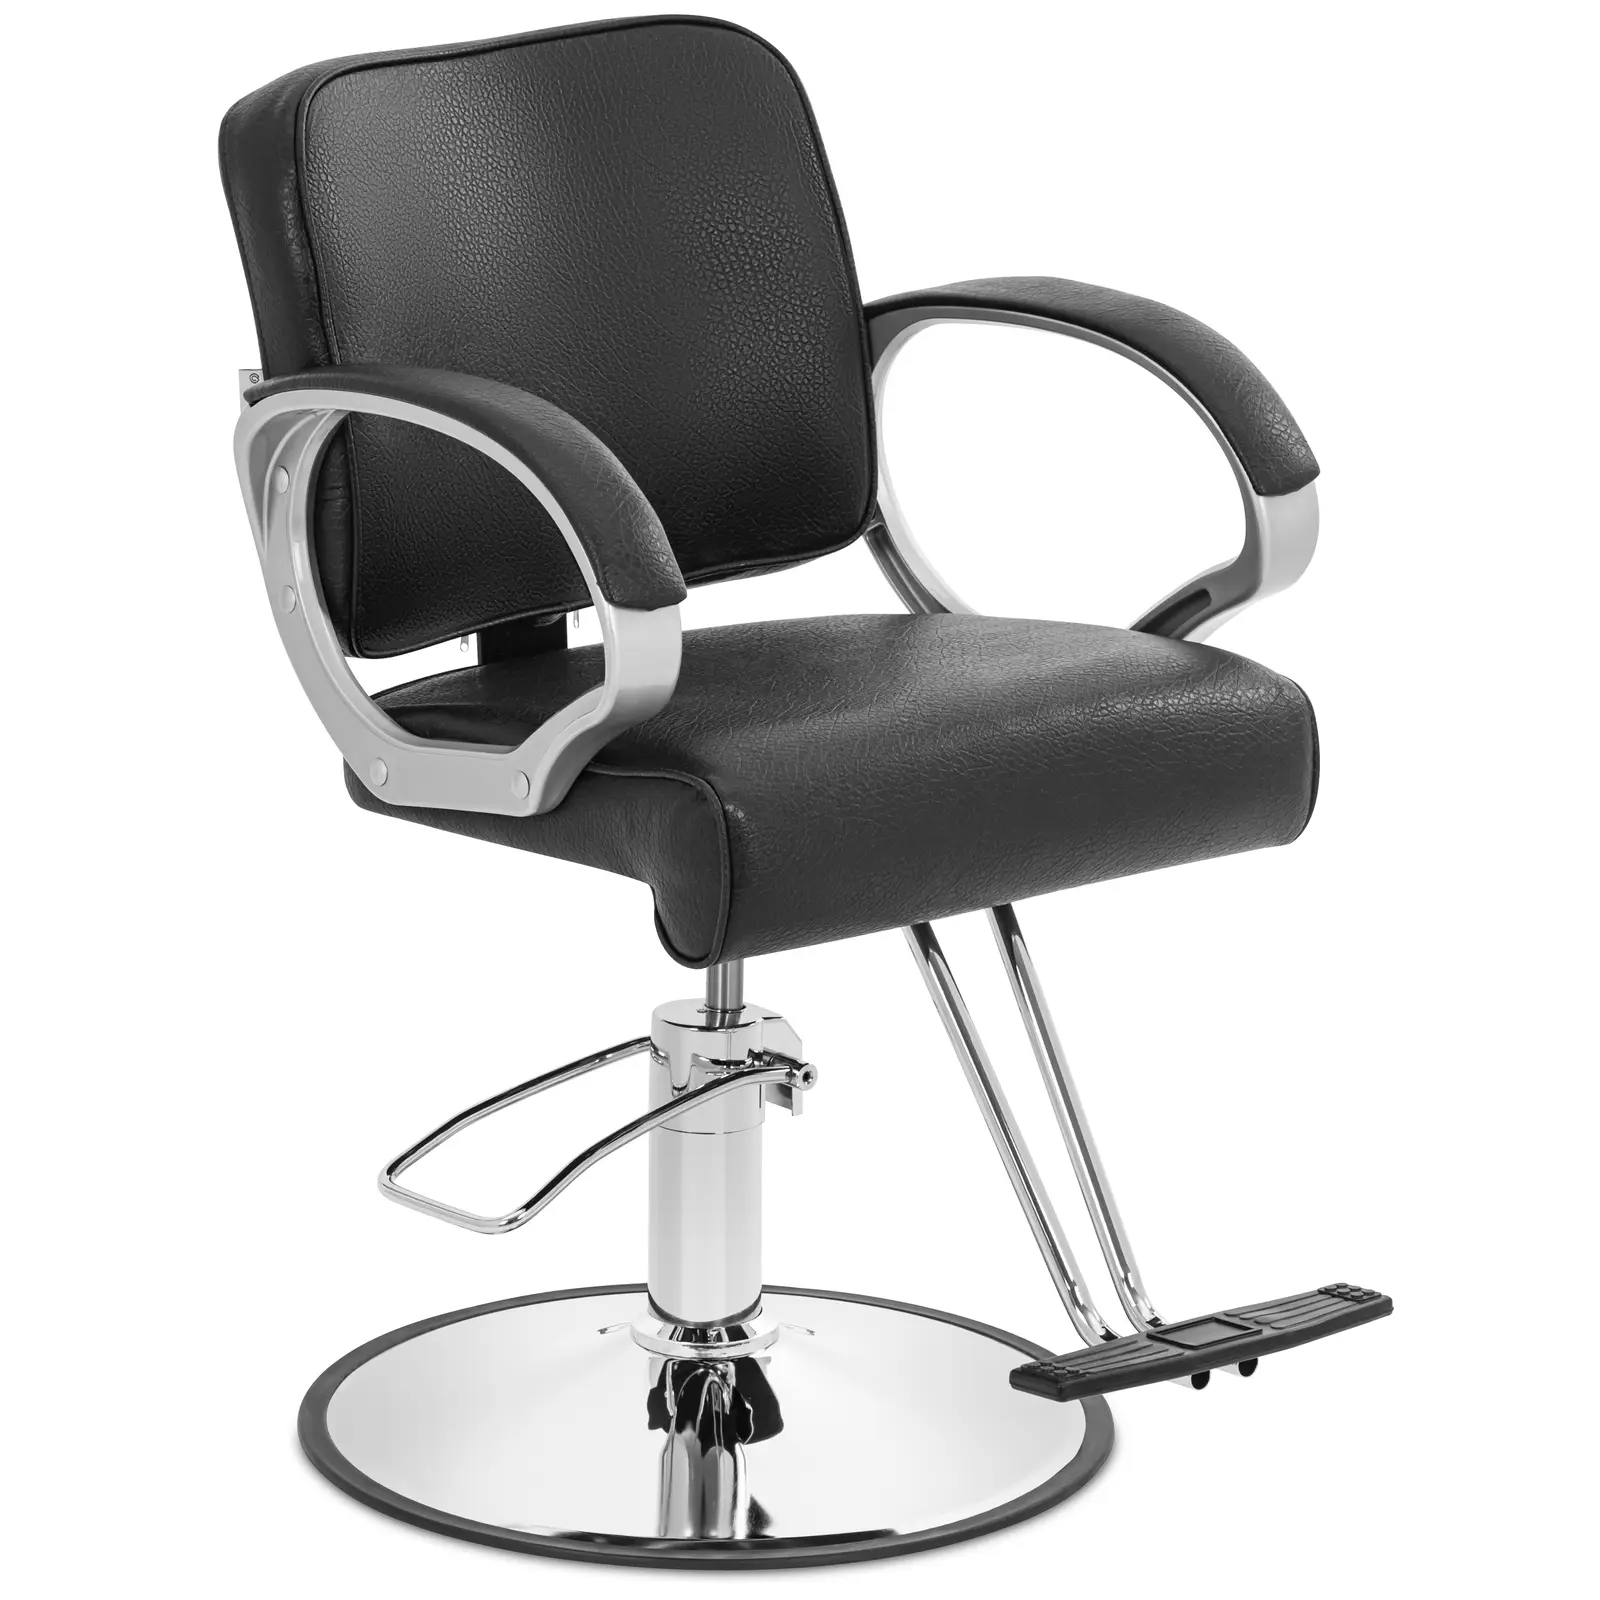 Fotel fryzjerski Hove z podnóżkiem - 50 - 60 cm - 180 kg - czarny